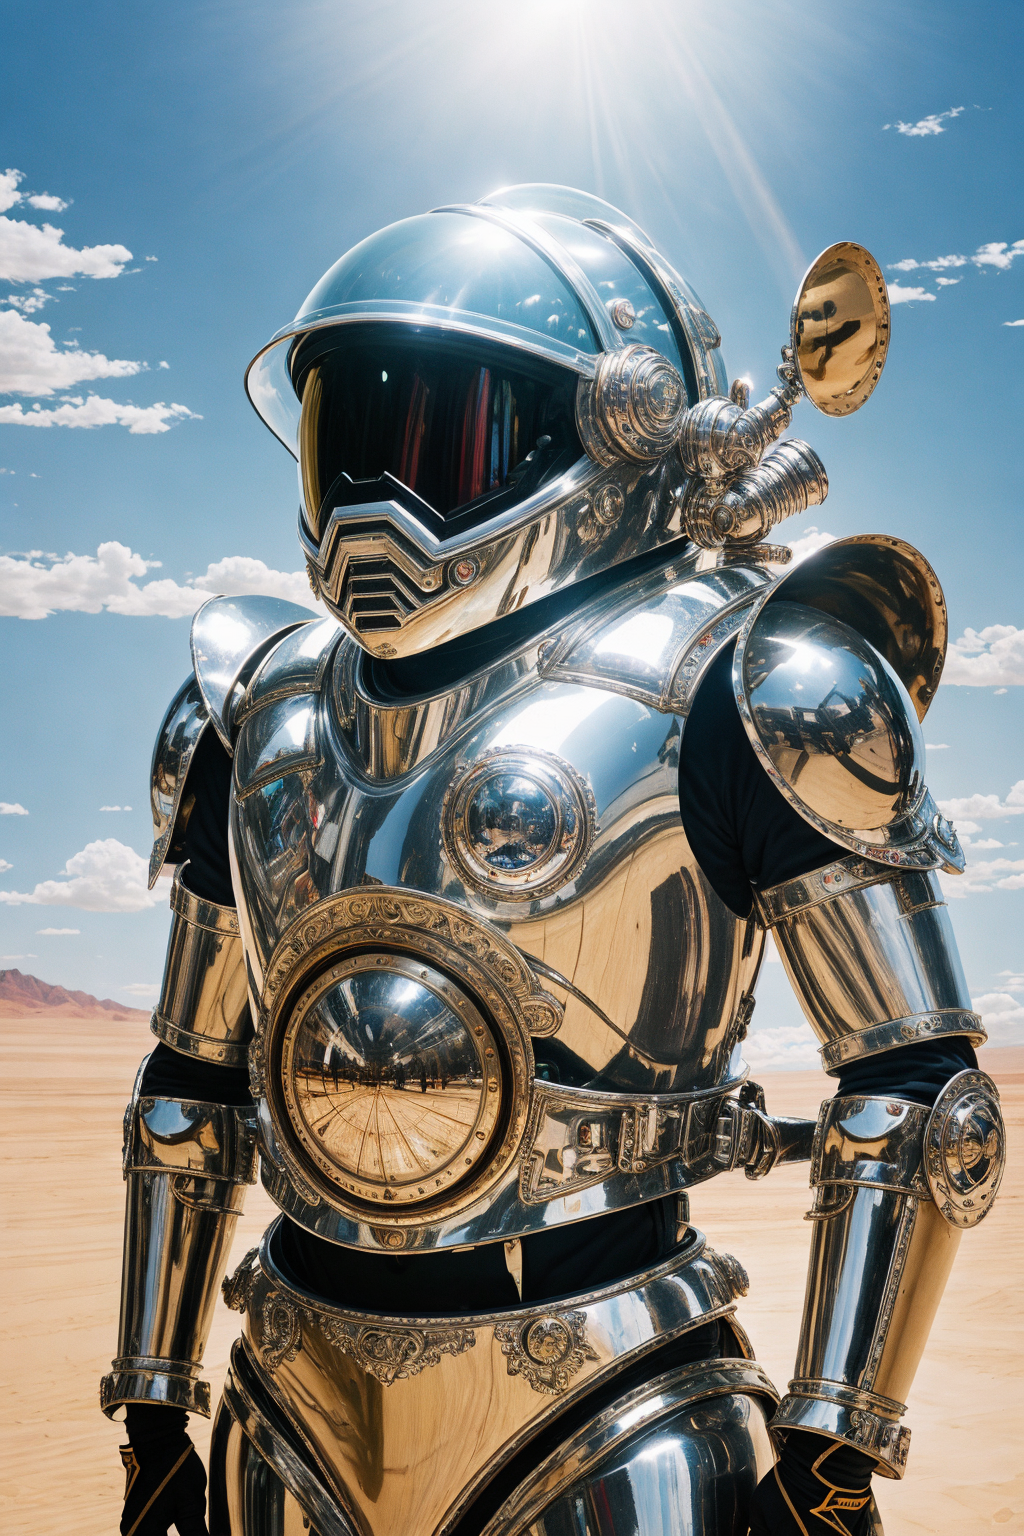 VeronicaCipher in a polished aluminum suit desert moon landscape jetpack glass dome helmet clockwork (AtomPunkStyleSD15:0....